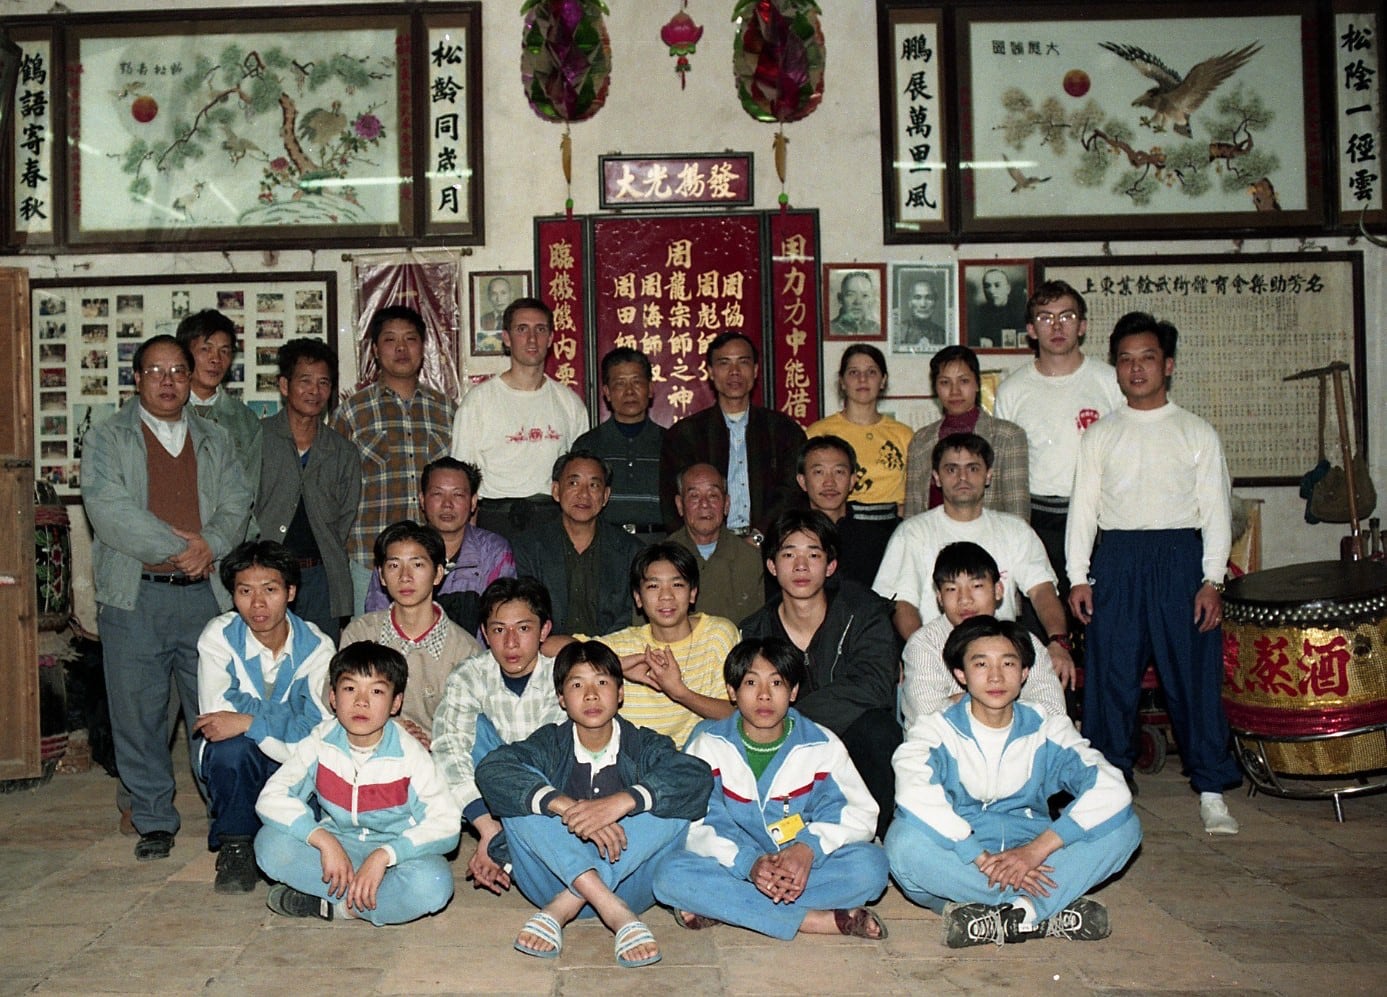 A group picture with members of the Jiujiang Ying Yong Tang School